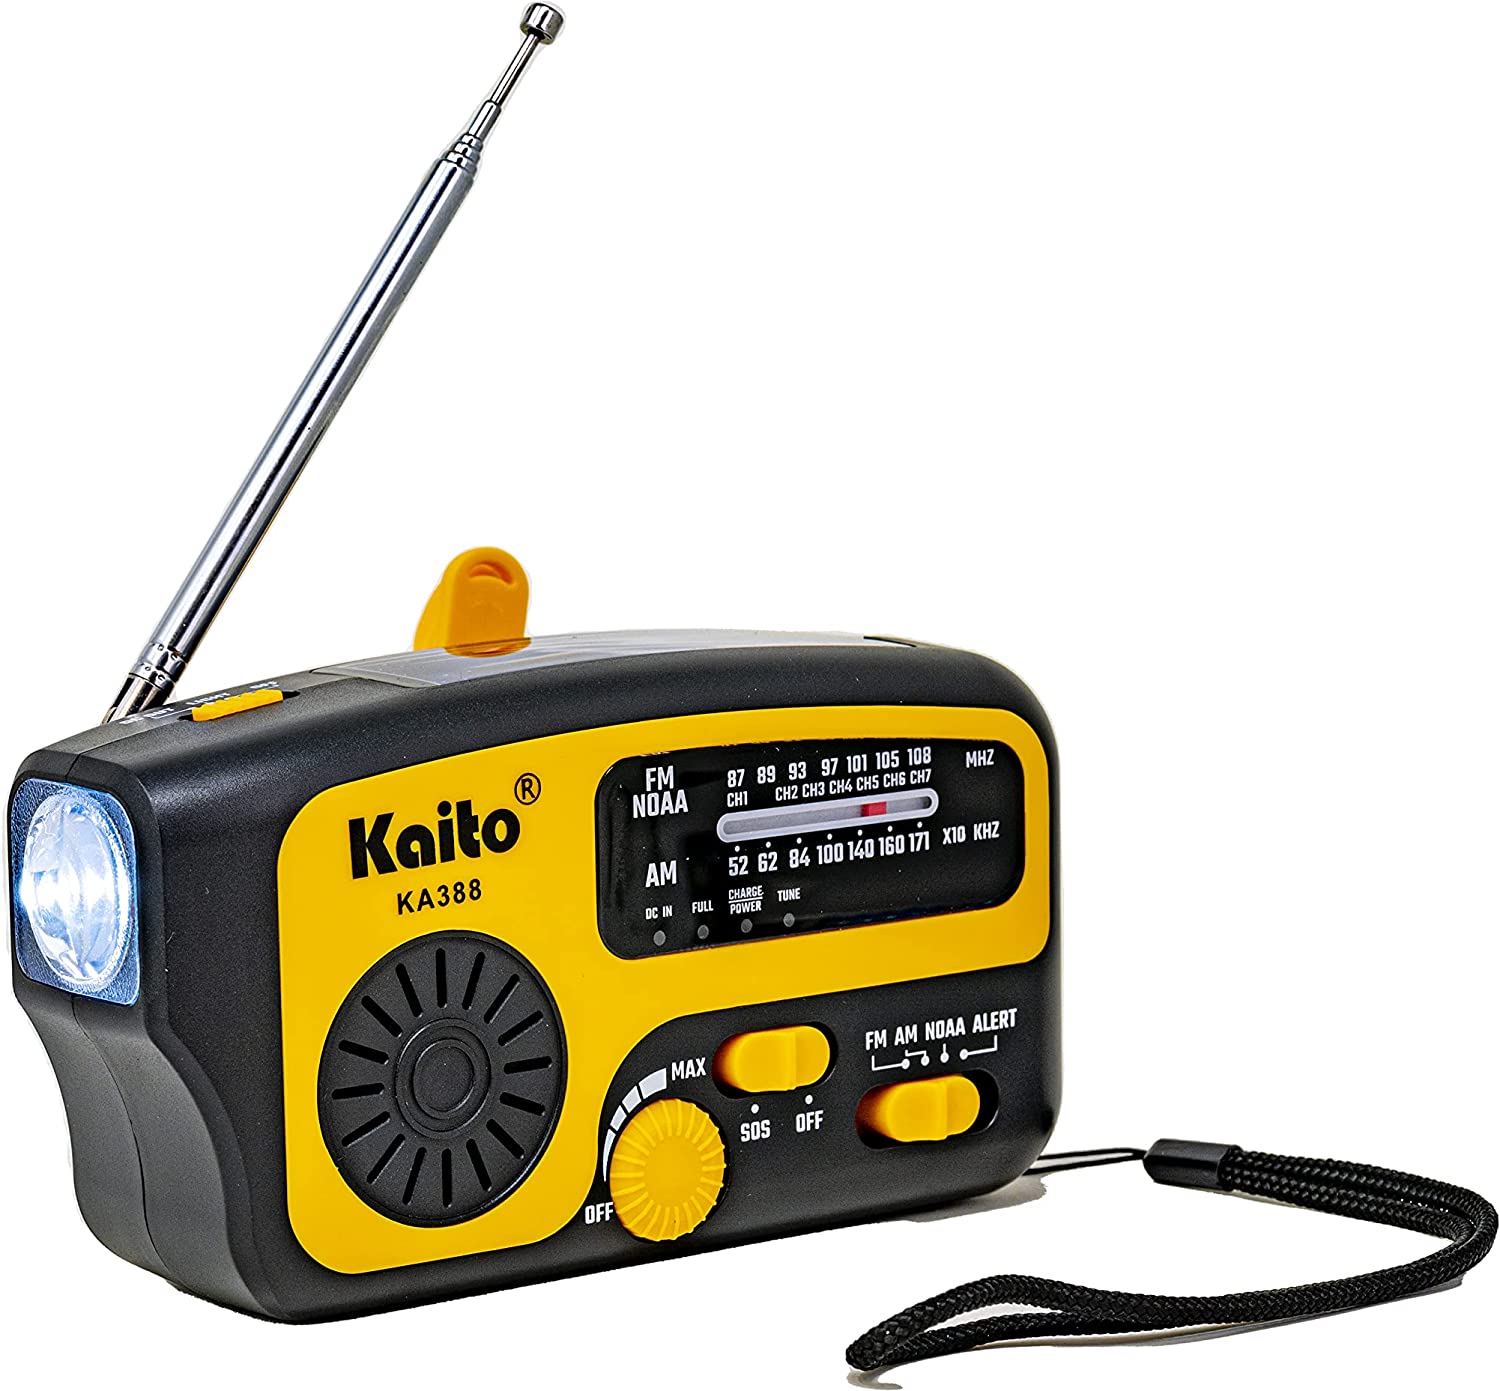 Kaito Emergency Radio KA388 – AM/FM NOAA Weather Alert 5-Way Powered Solar Crank Radio Receiver with LED Flashlight and USB Mobile Phone Charger (Yellow)